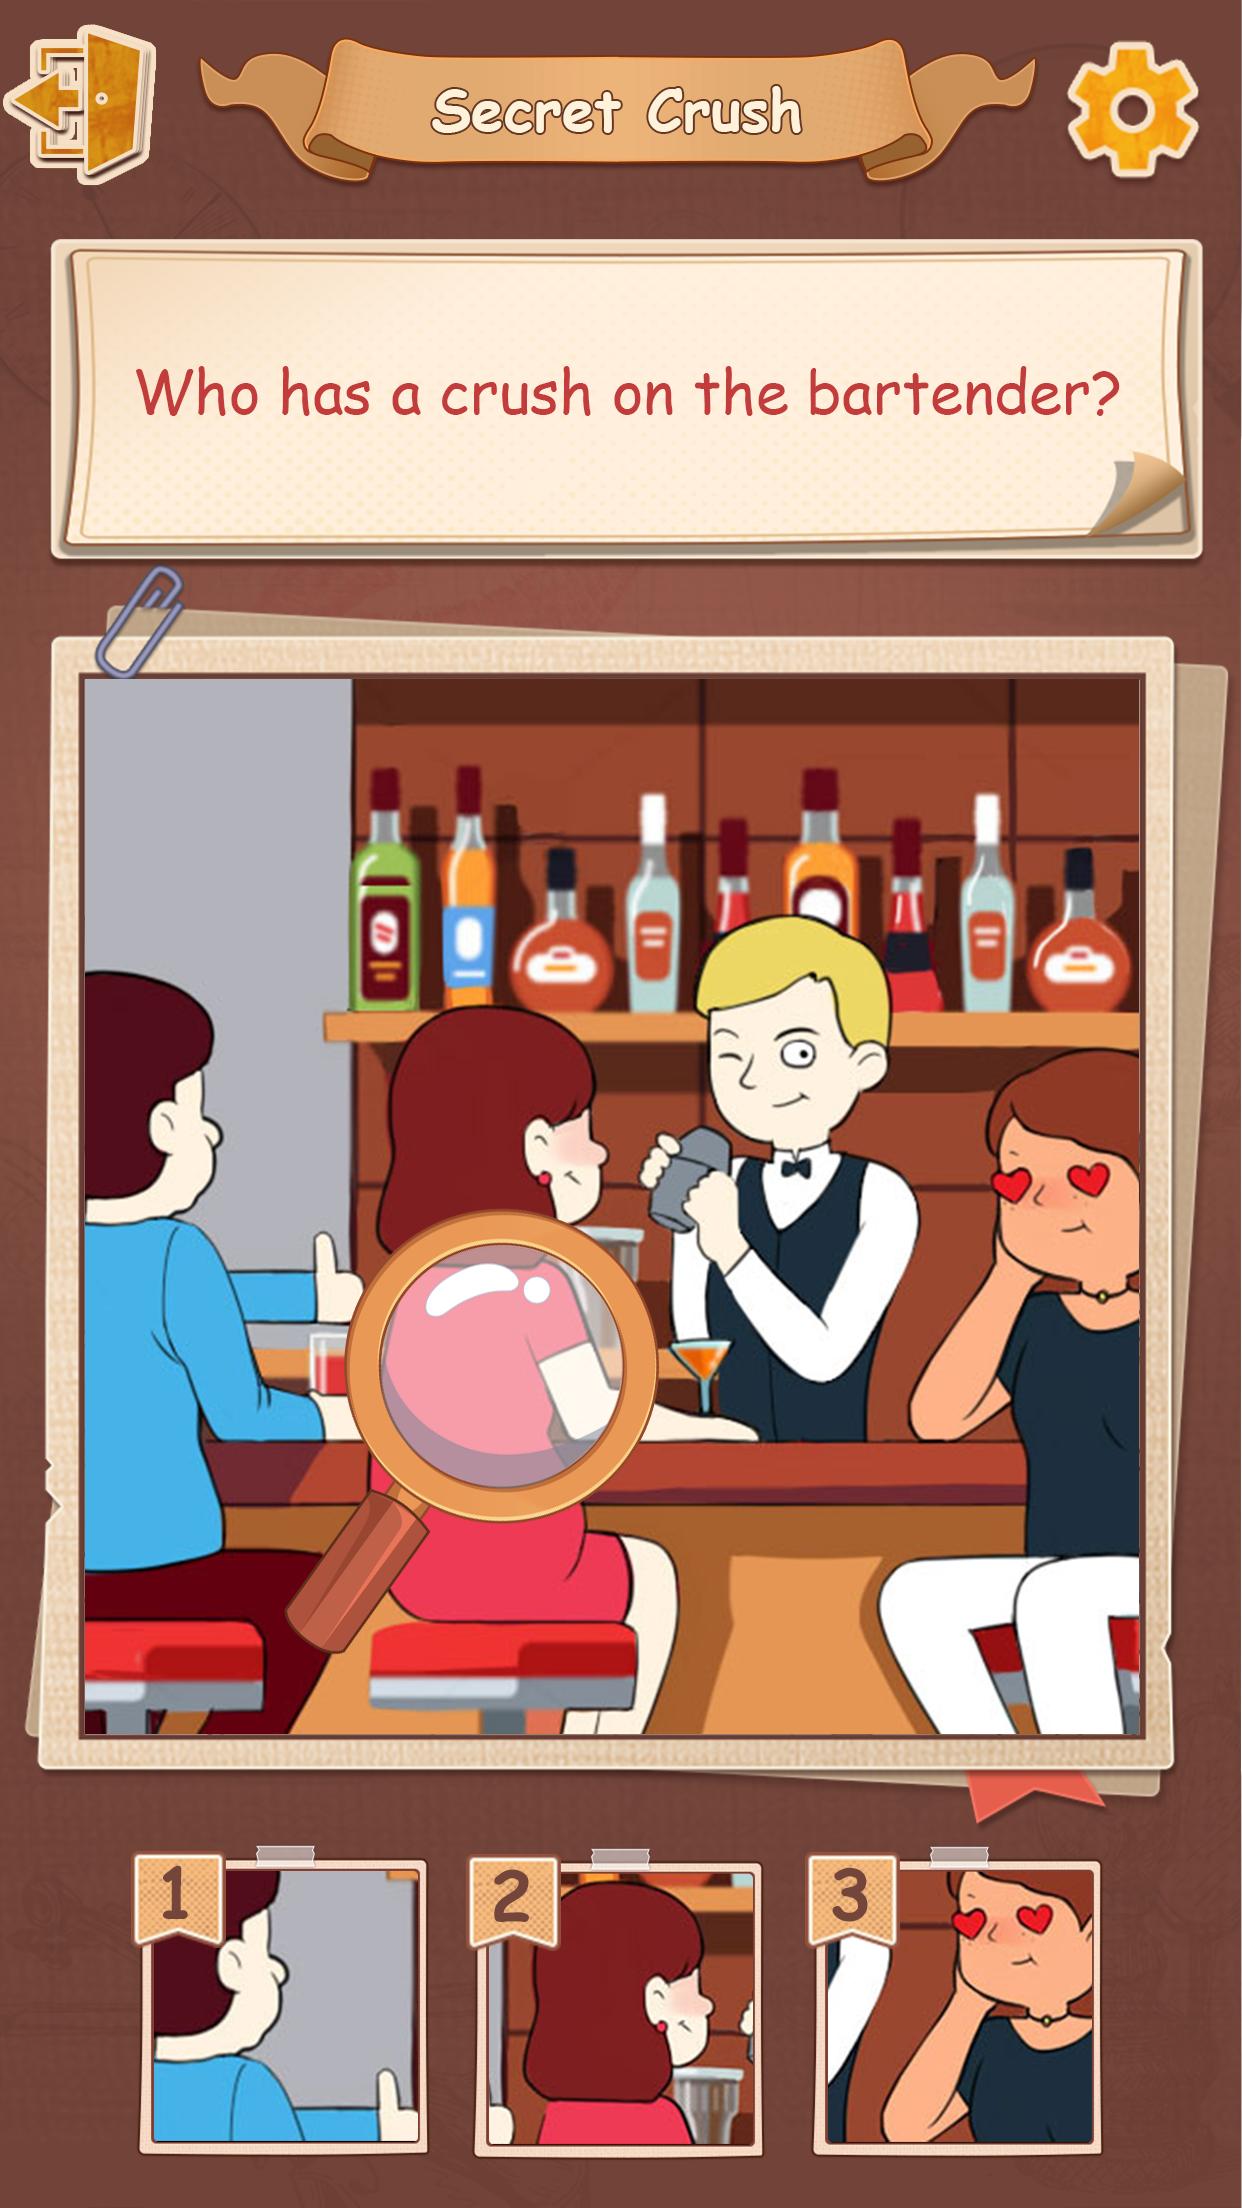 Who is the bartender on secret crush?